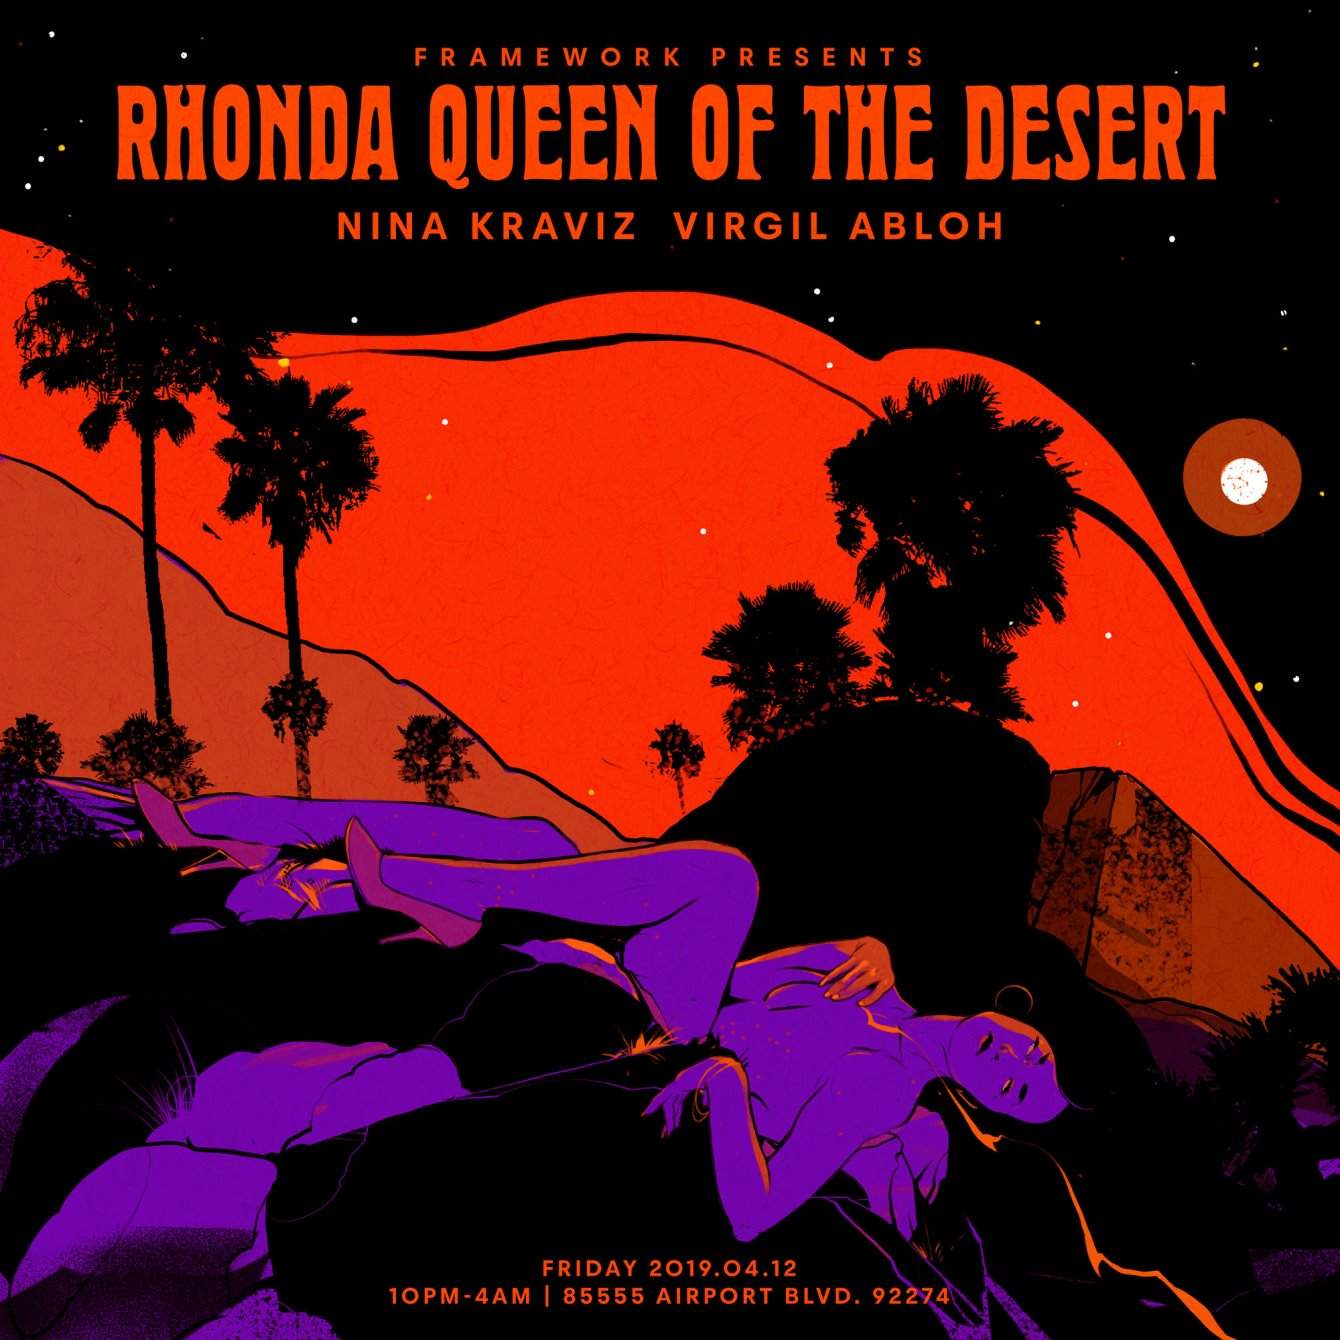 Rhonda books Nina Kraviz and Virgil Abloh for post-Coachella party in the desert image